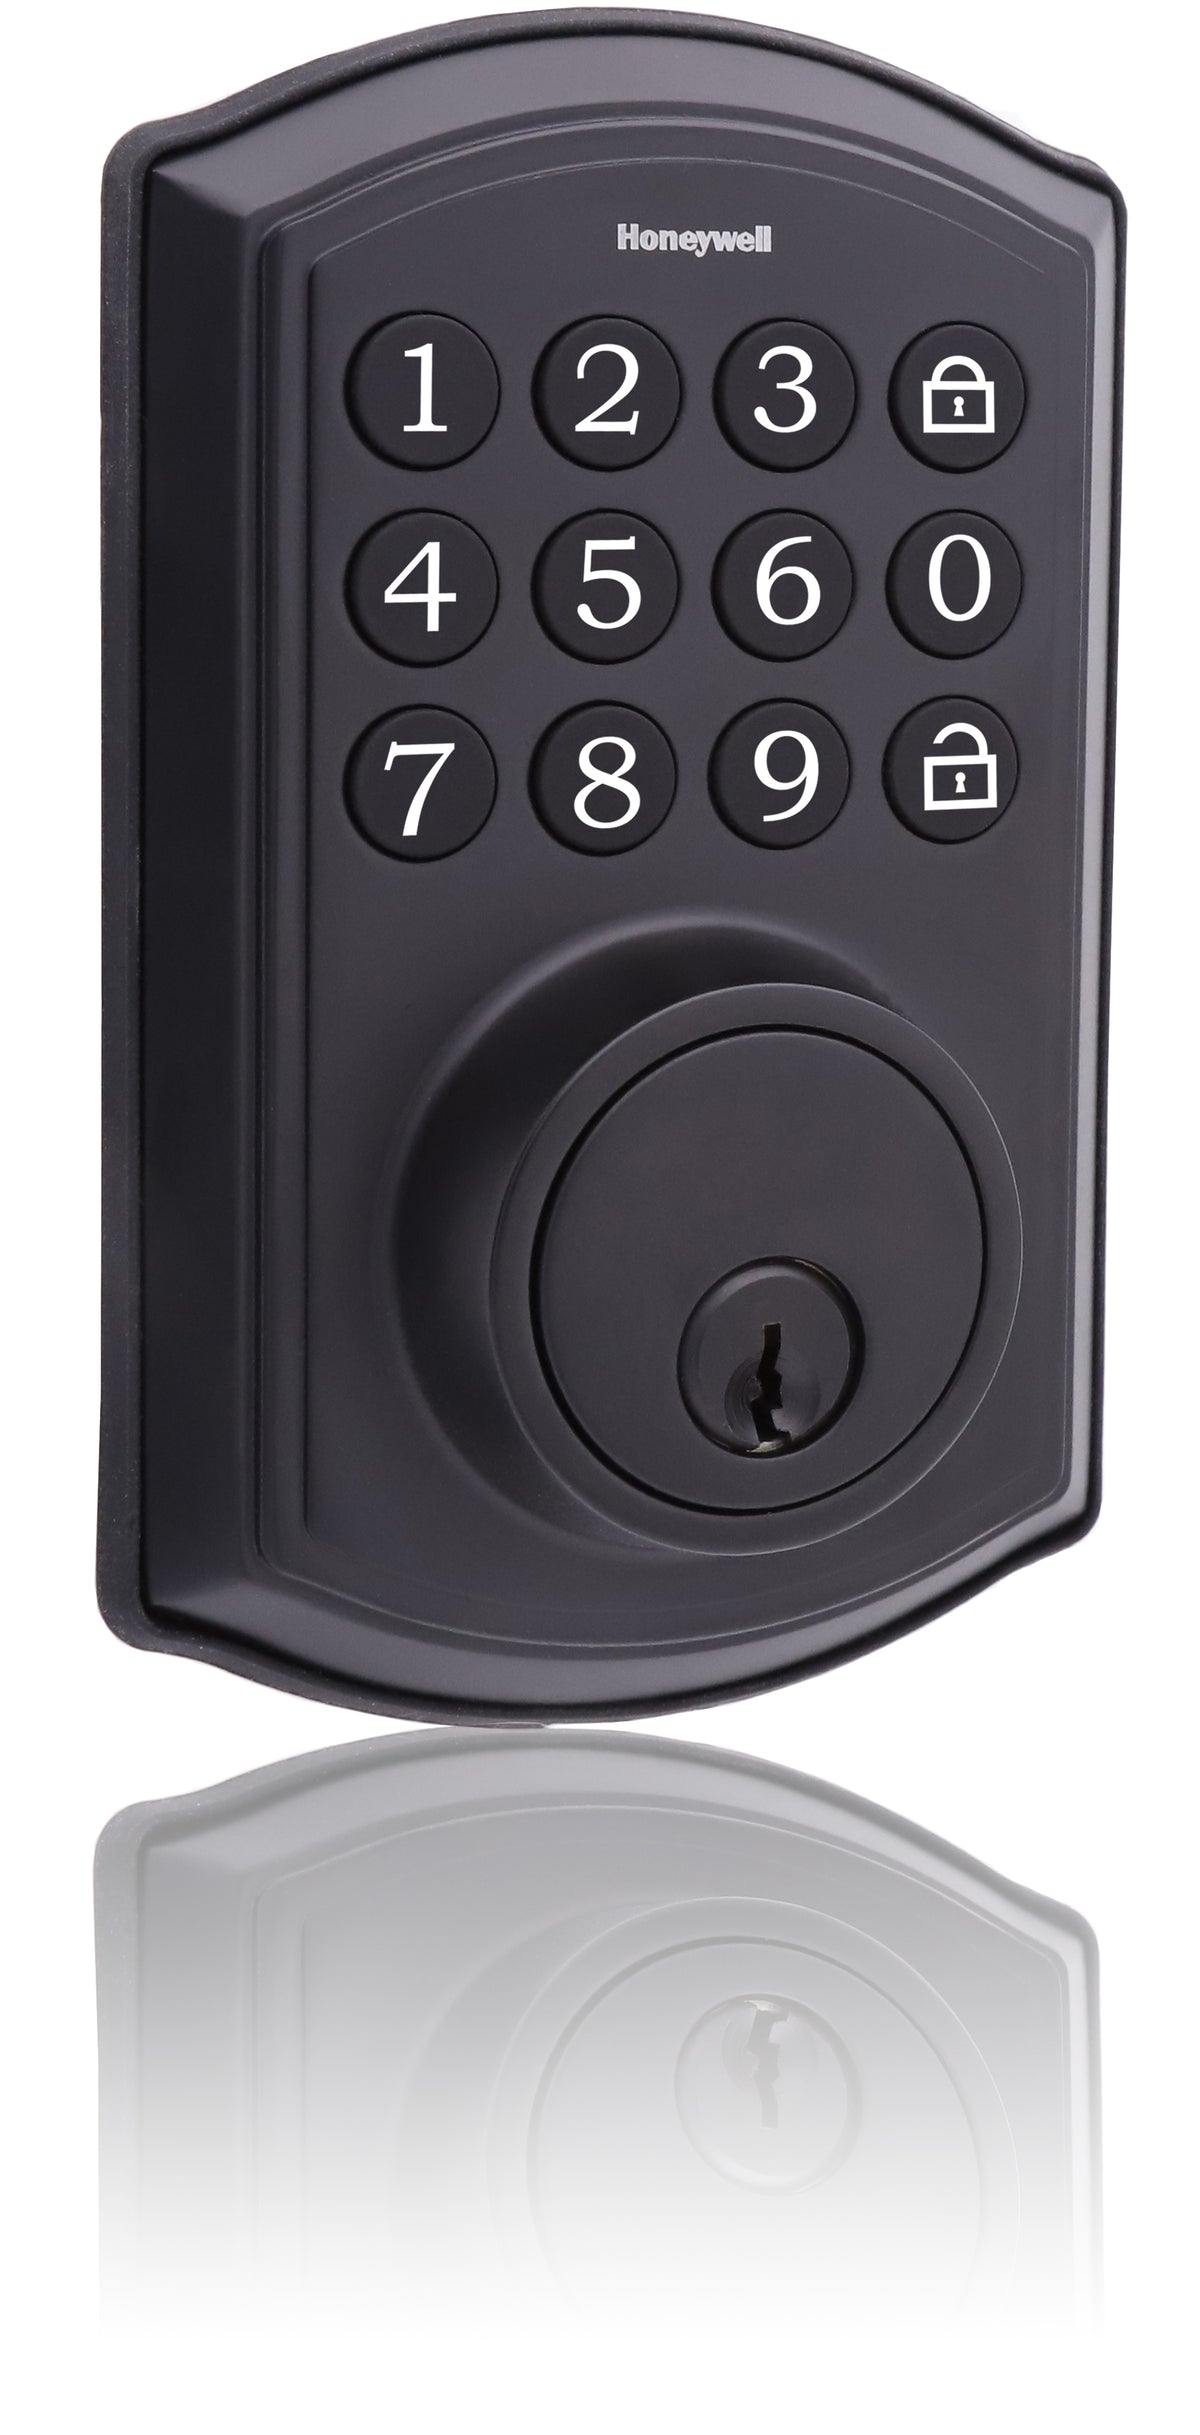 Honeywell 8635028 Digital Deadbolt Door Lock with Electronic Keypad 2